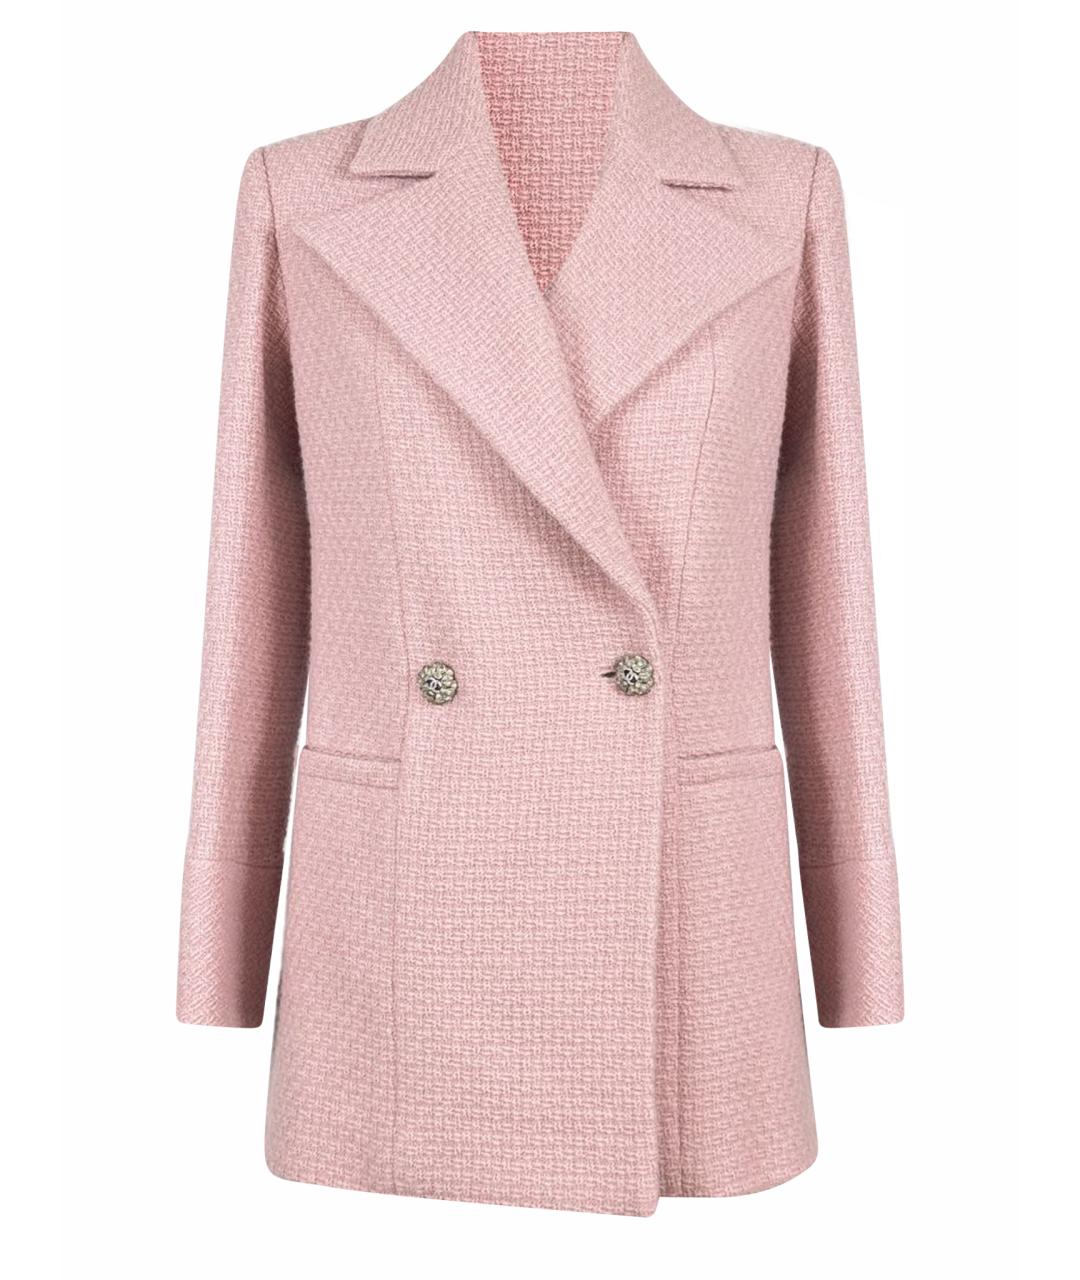 CHANEL PRE-OWNED Розовый твидовый жакет/пиджак, фото 1